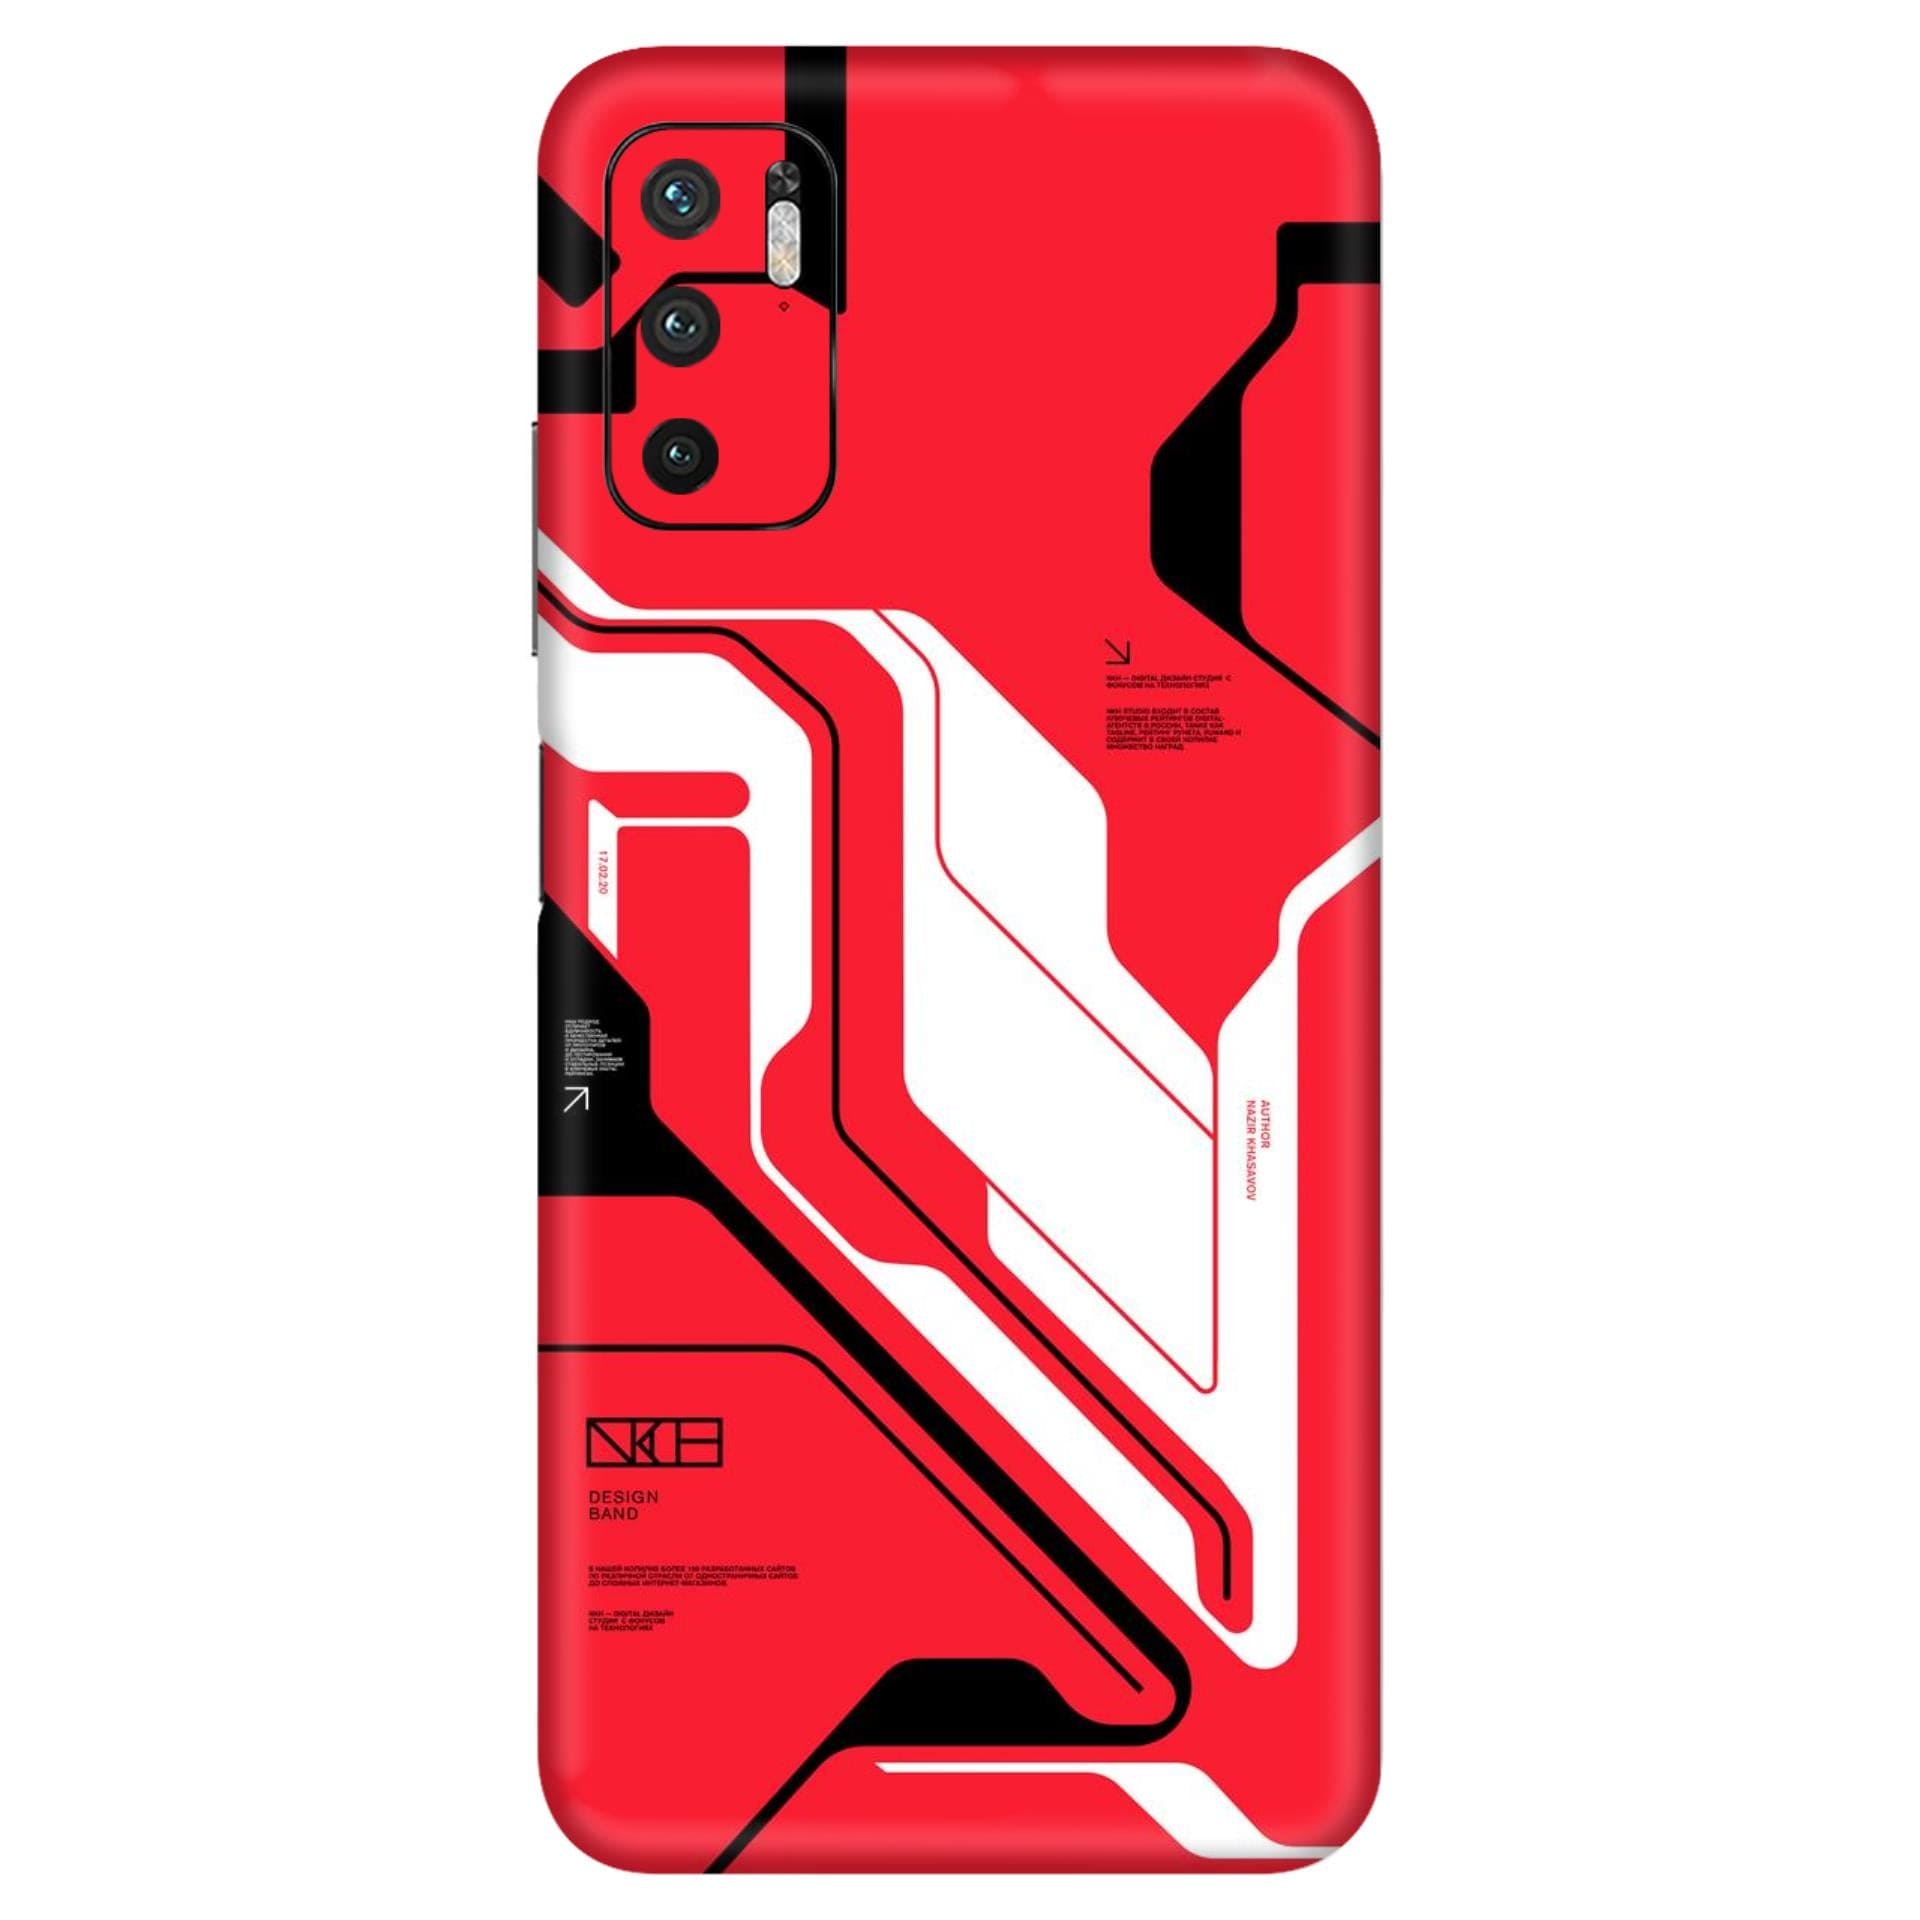 Redmi Note 10T Cyber Red skins